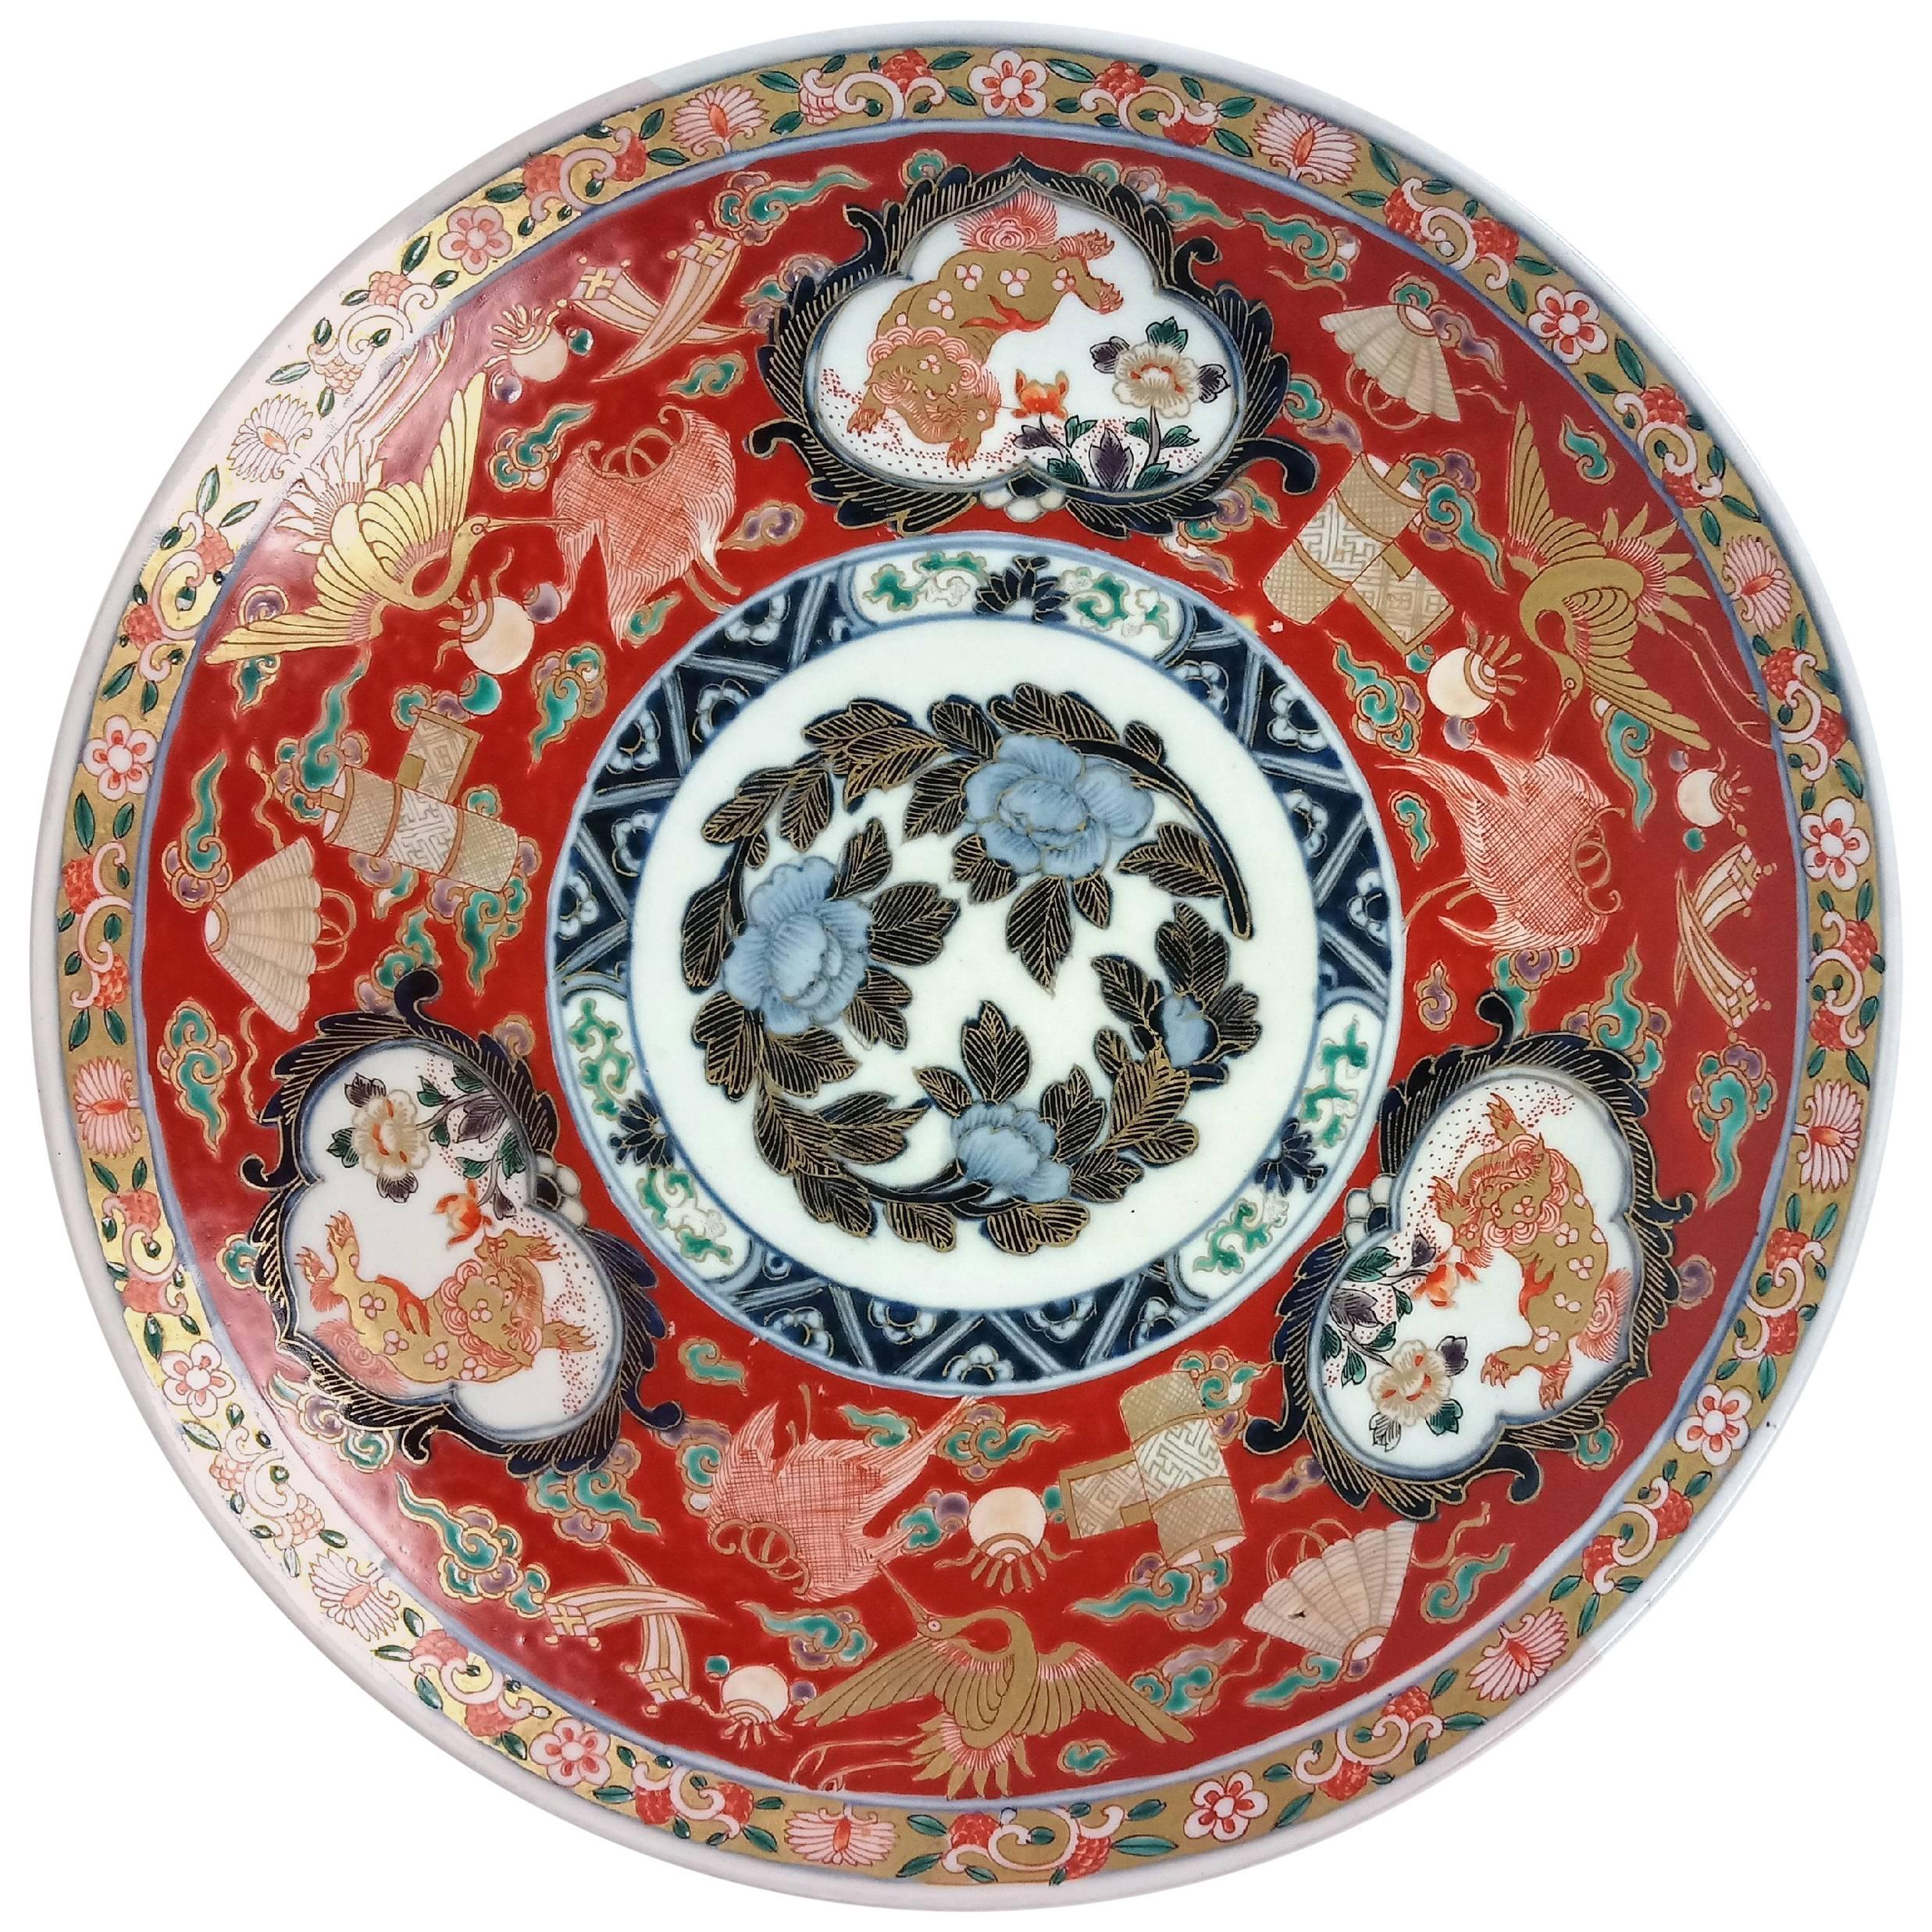 19th Century Japanese Imari Pottery Dish with Cranes